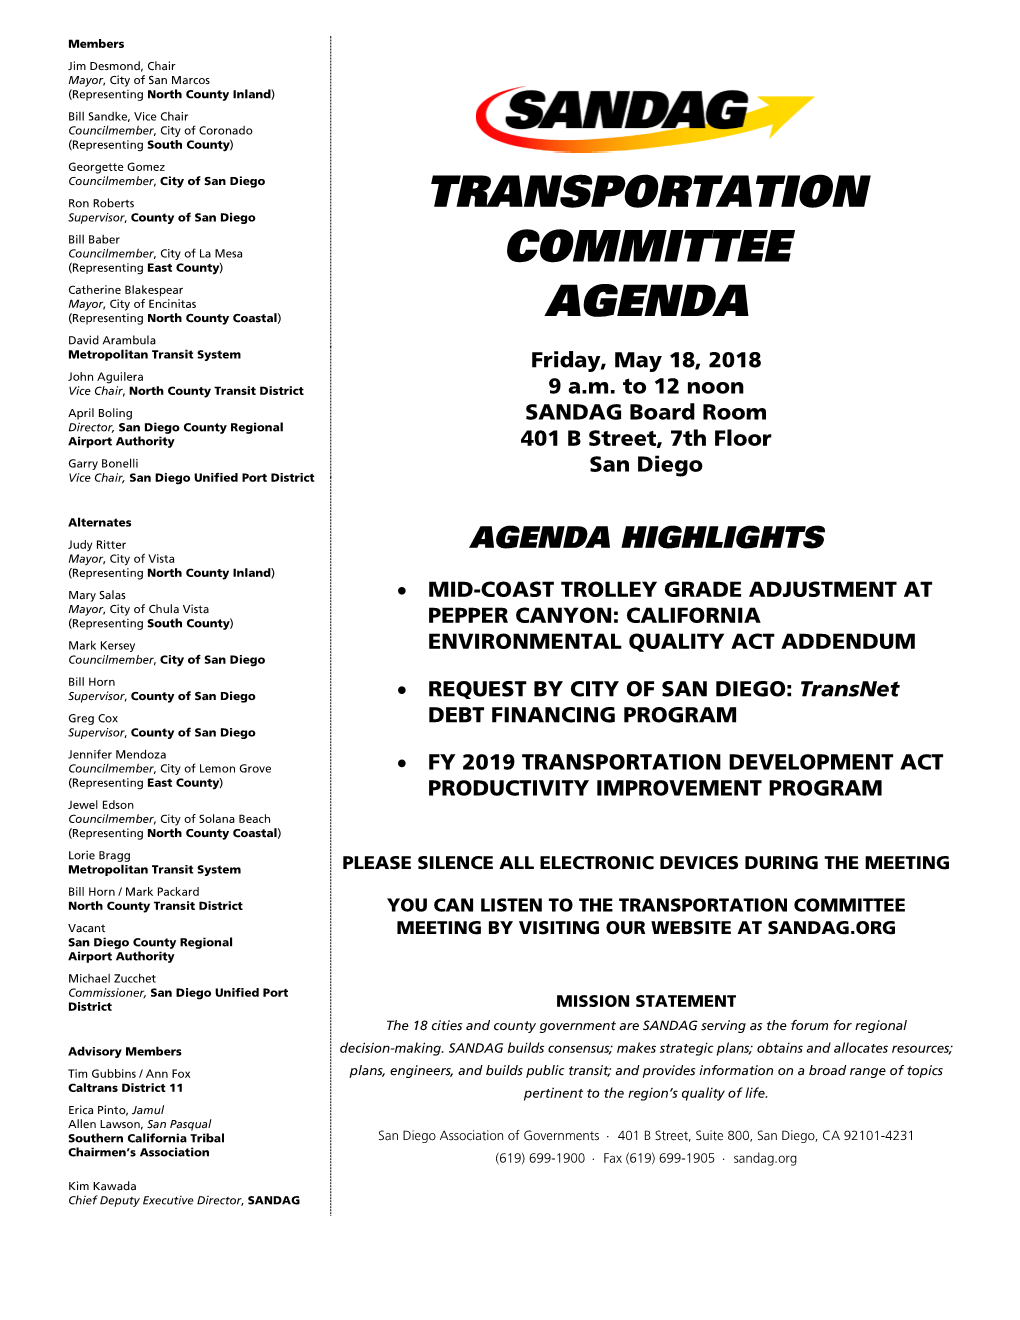 AGENDA David Arambula Metropolitan Transit System Friday, May 18, 2018 John Aguilera Vice Chair, North County Transit District 9 A.M